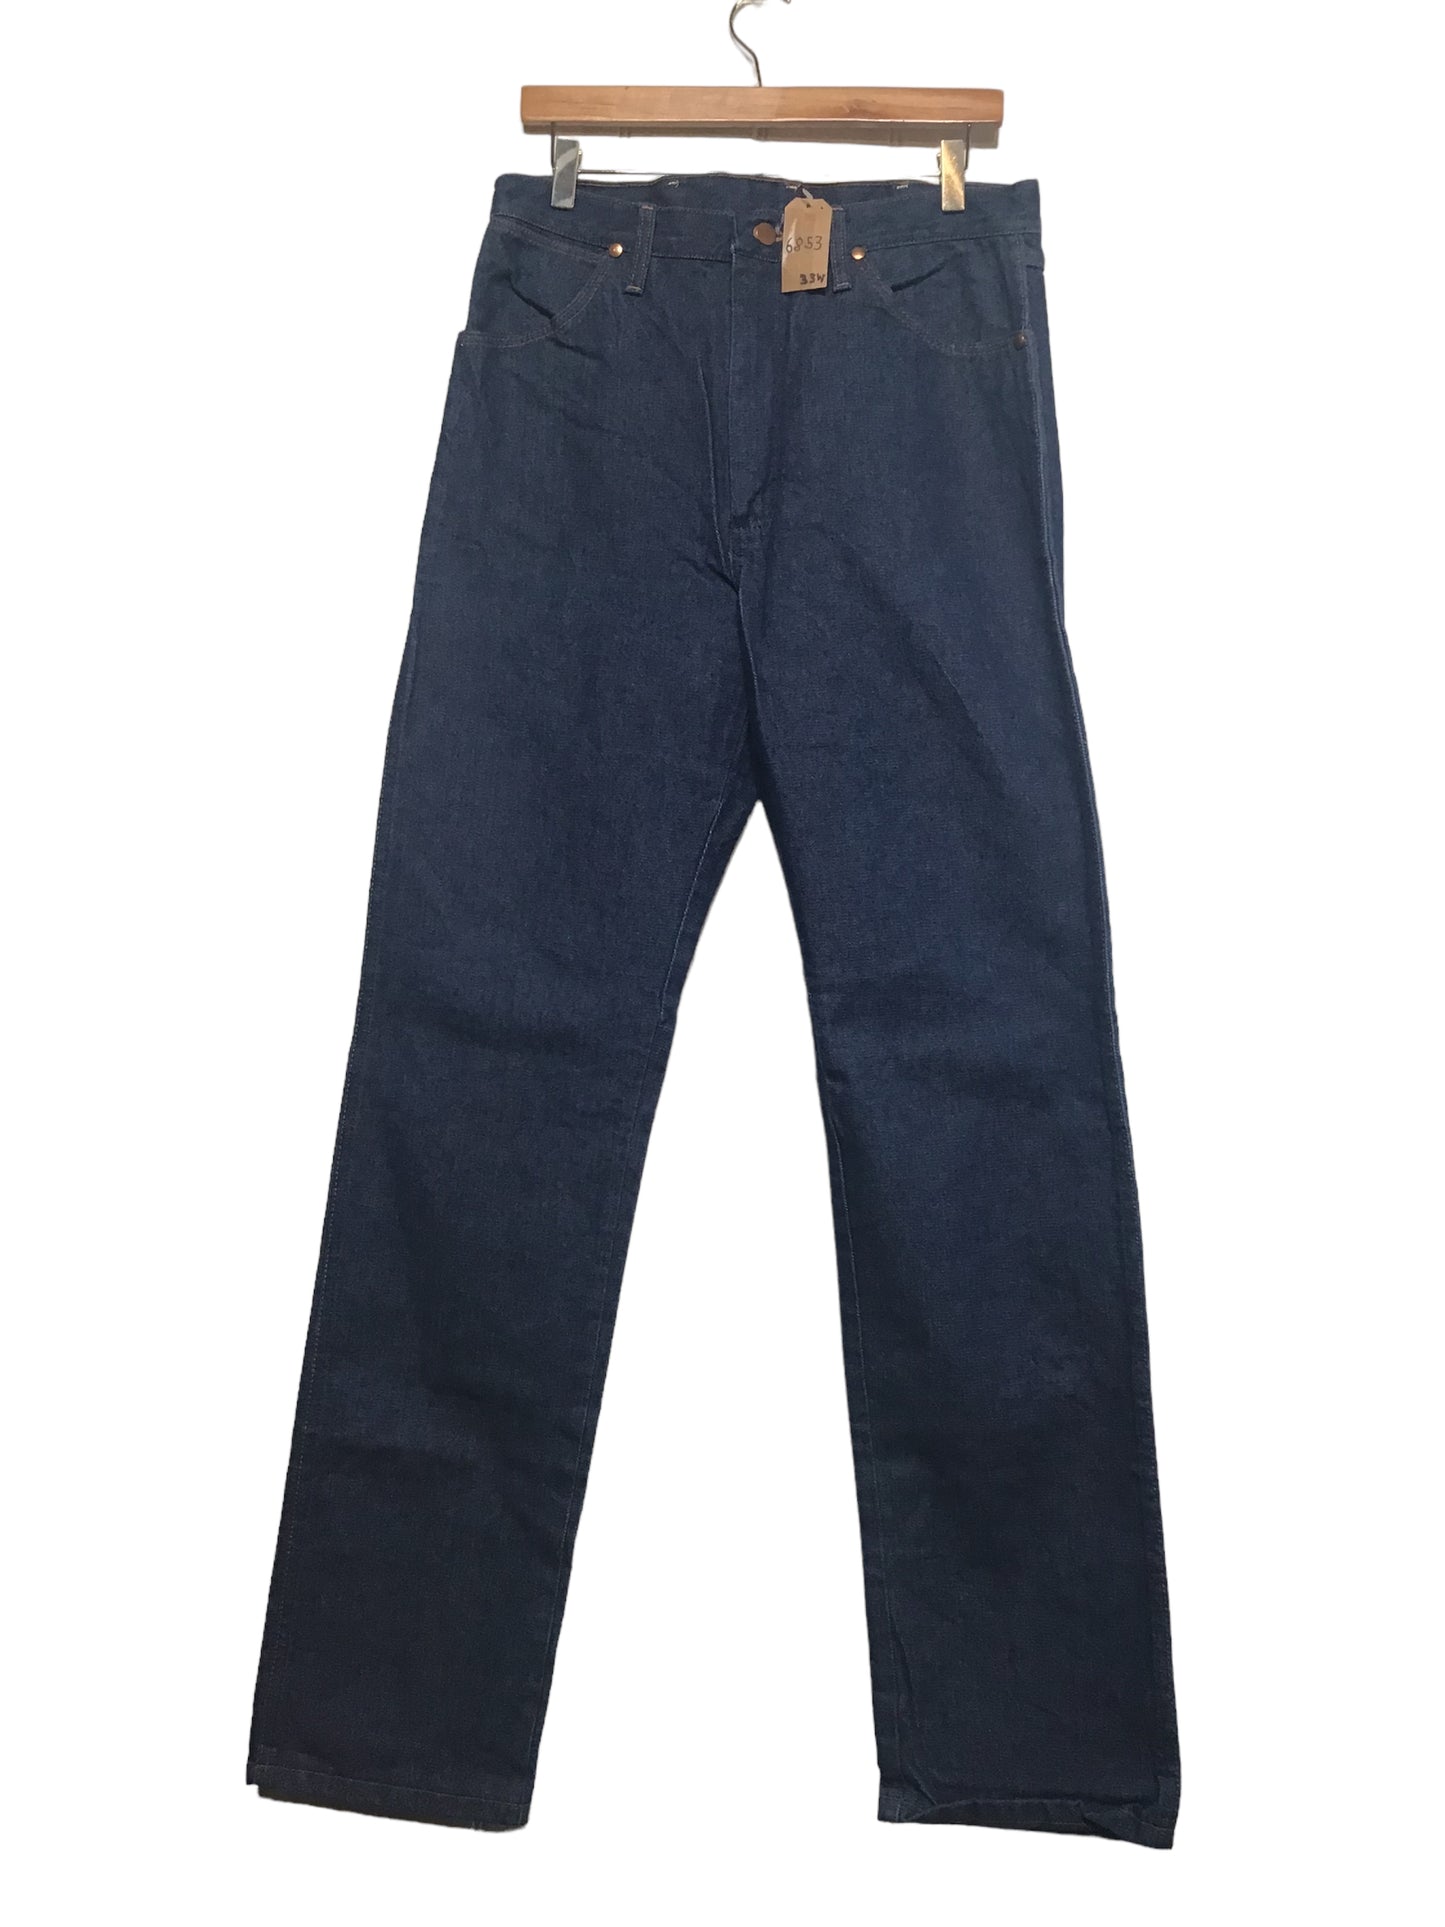 Wrangler Jeans (33x36)